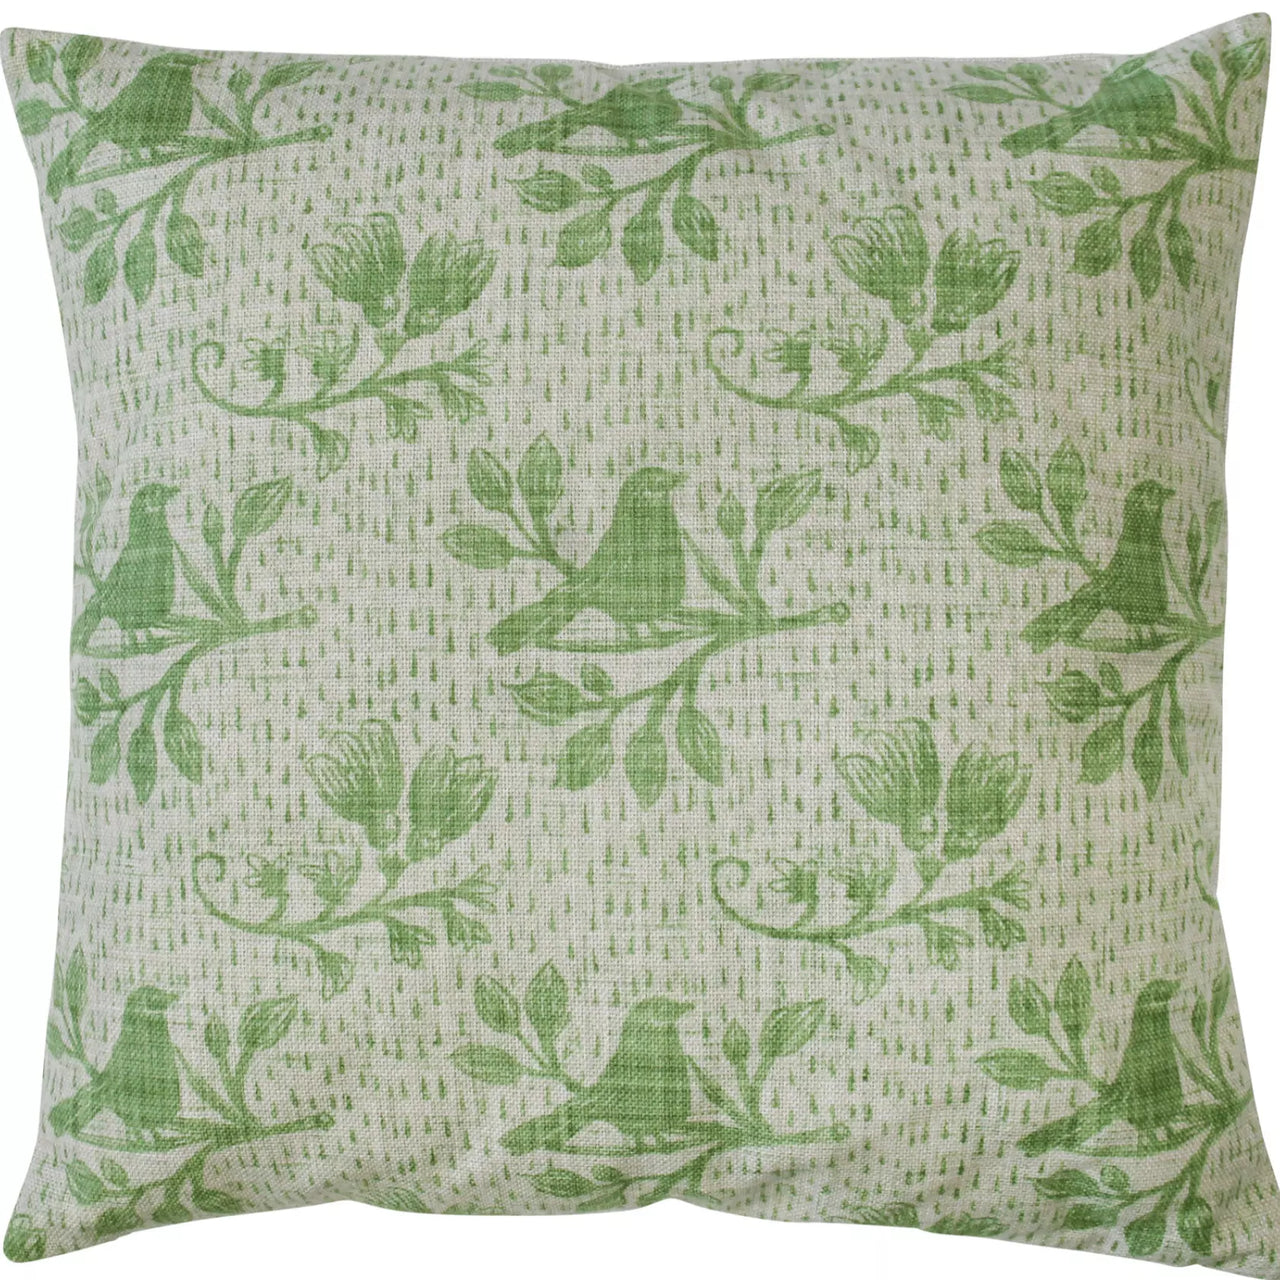 A LaVida Sage Green Bird Cushion with birds on it.